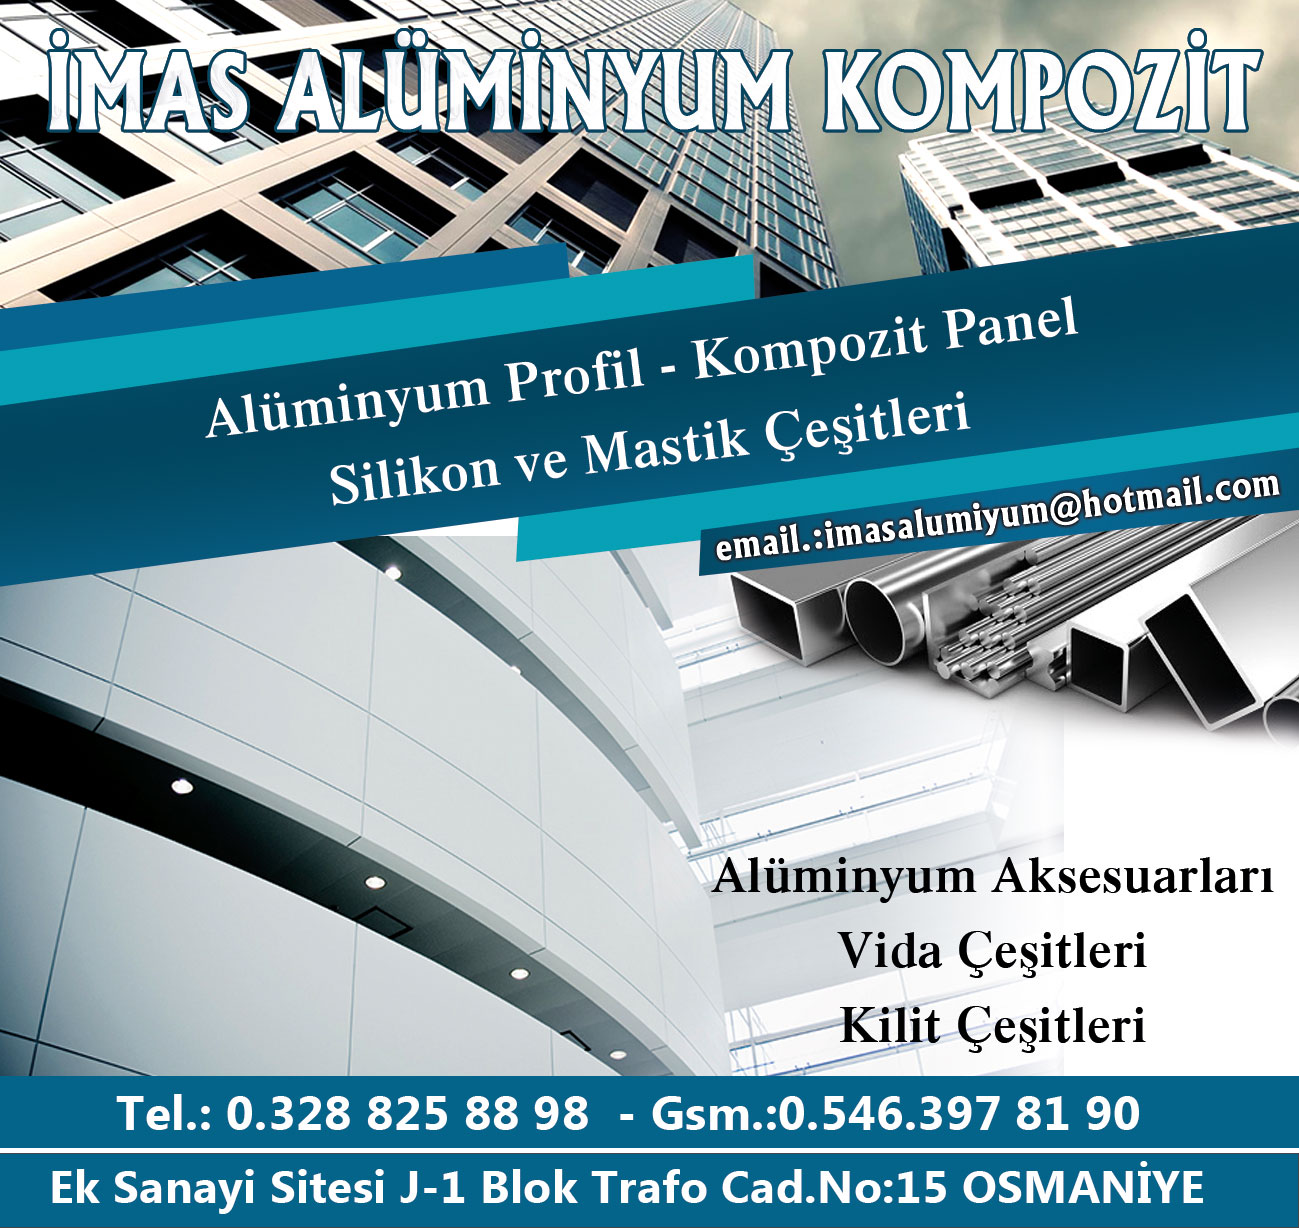 imas-alumiyum-kompozit-osmaniye